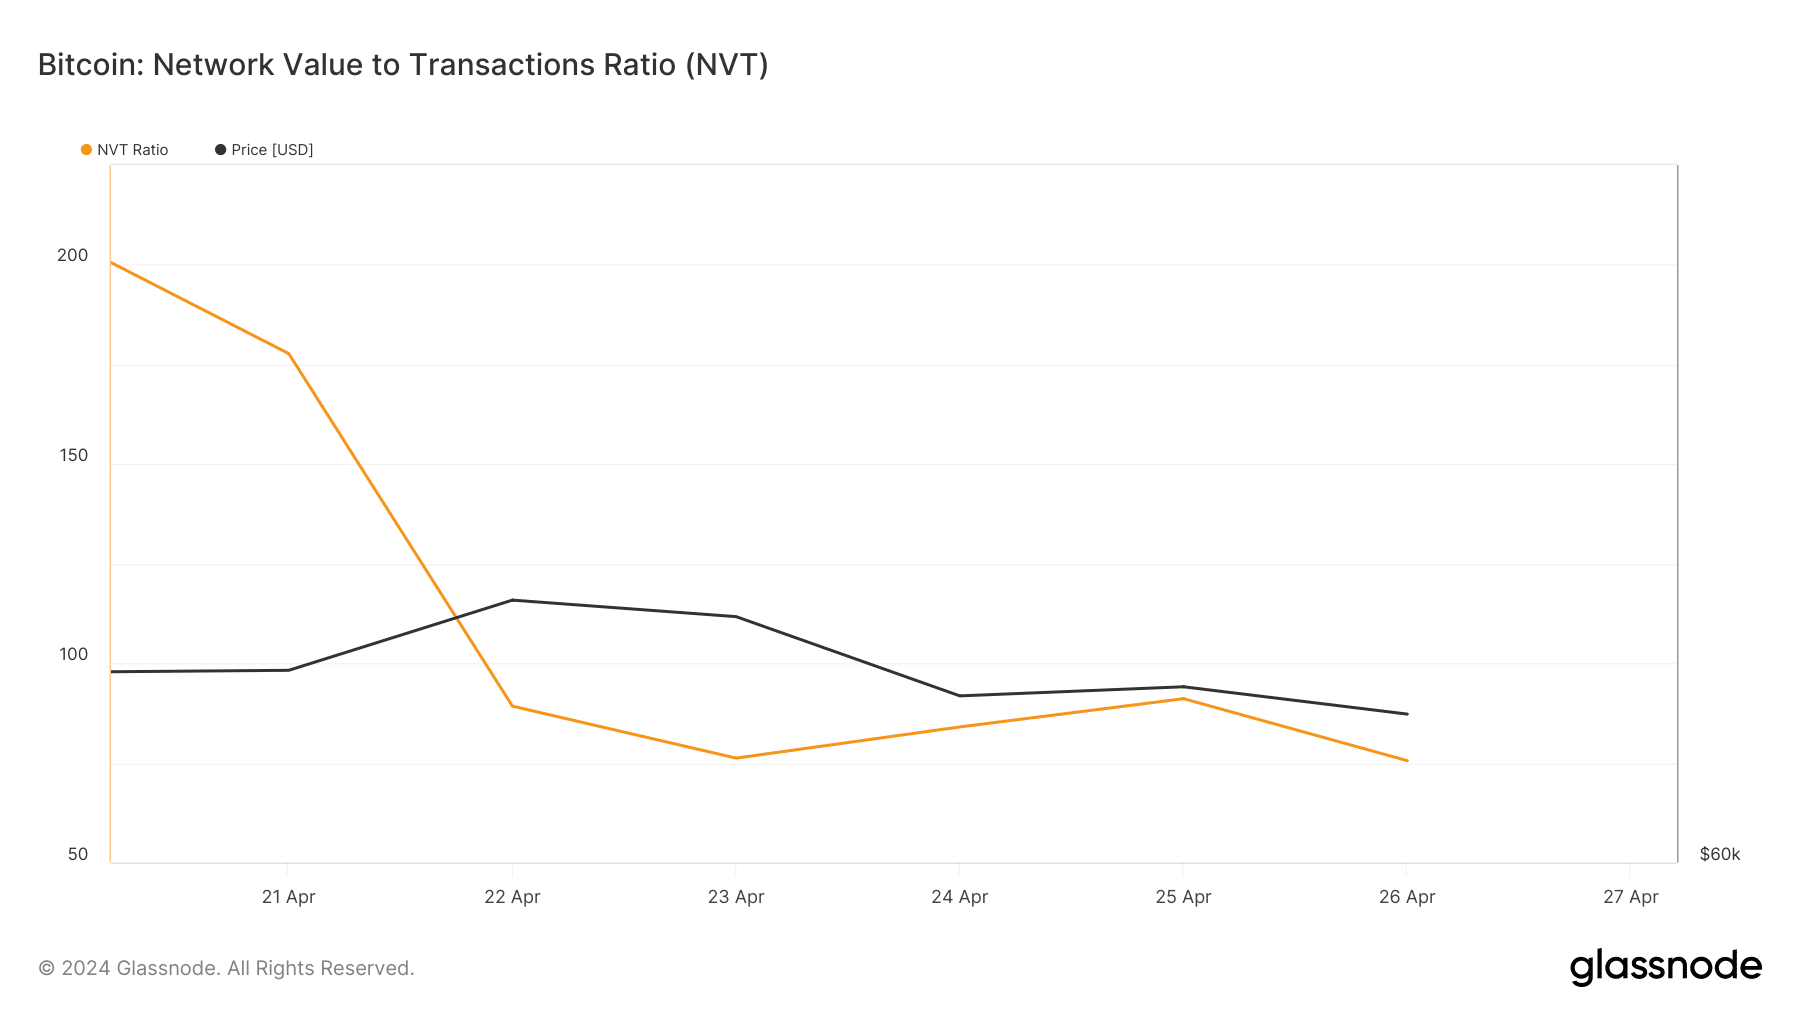 BTC's NVT Ratio declined